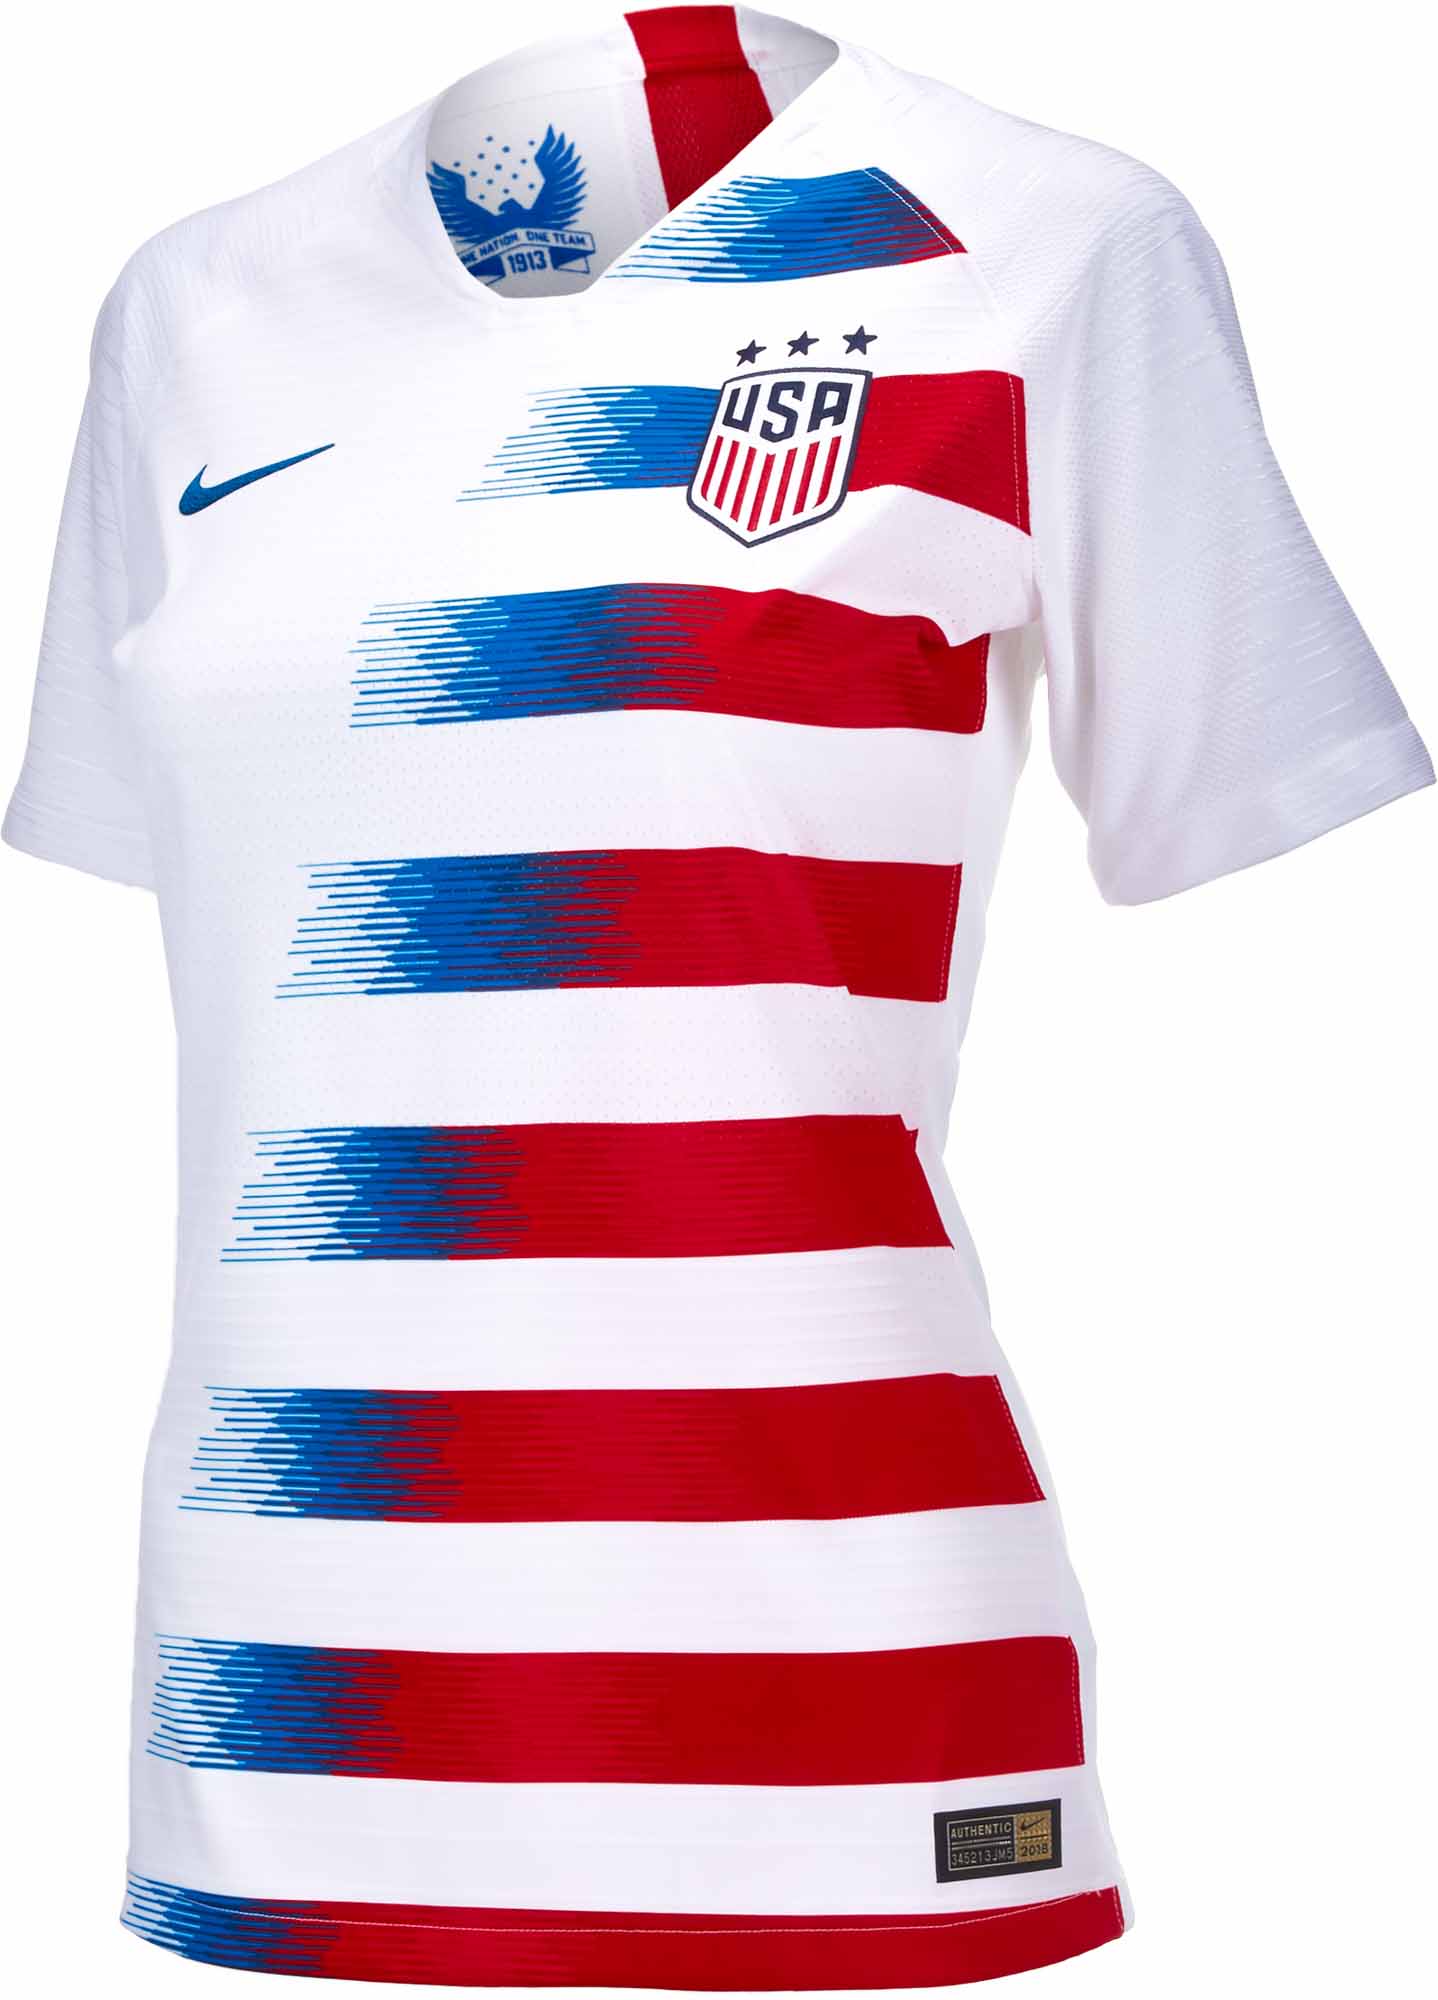 Women's Nike USA Home Match Jersey 201819  SoccerPro.com